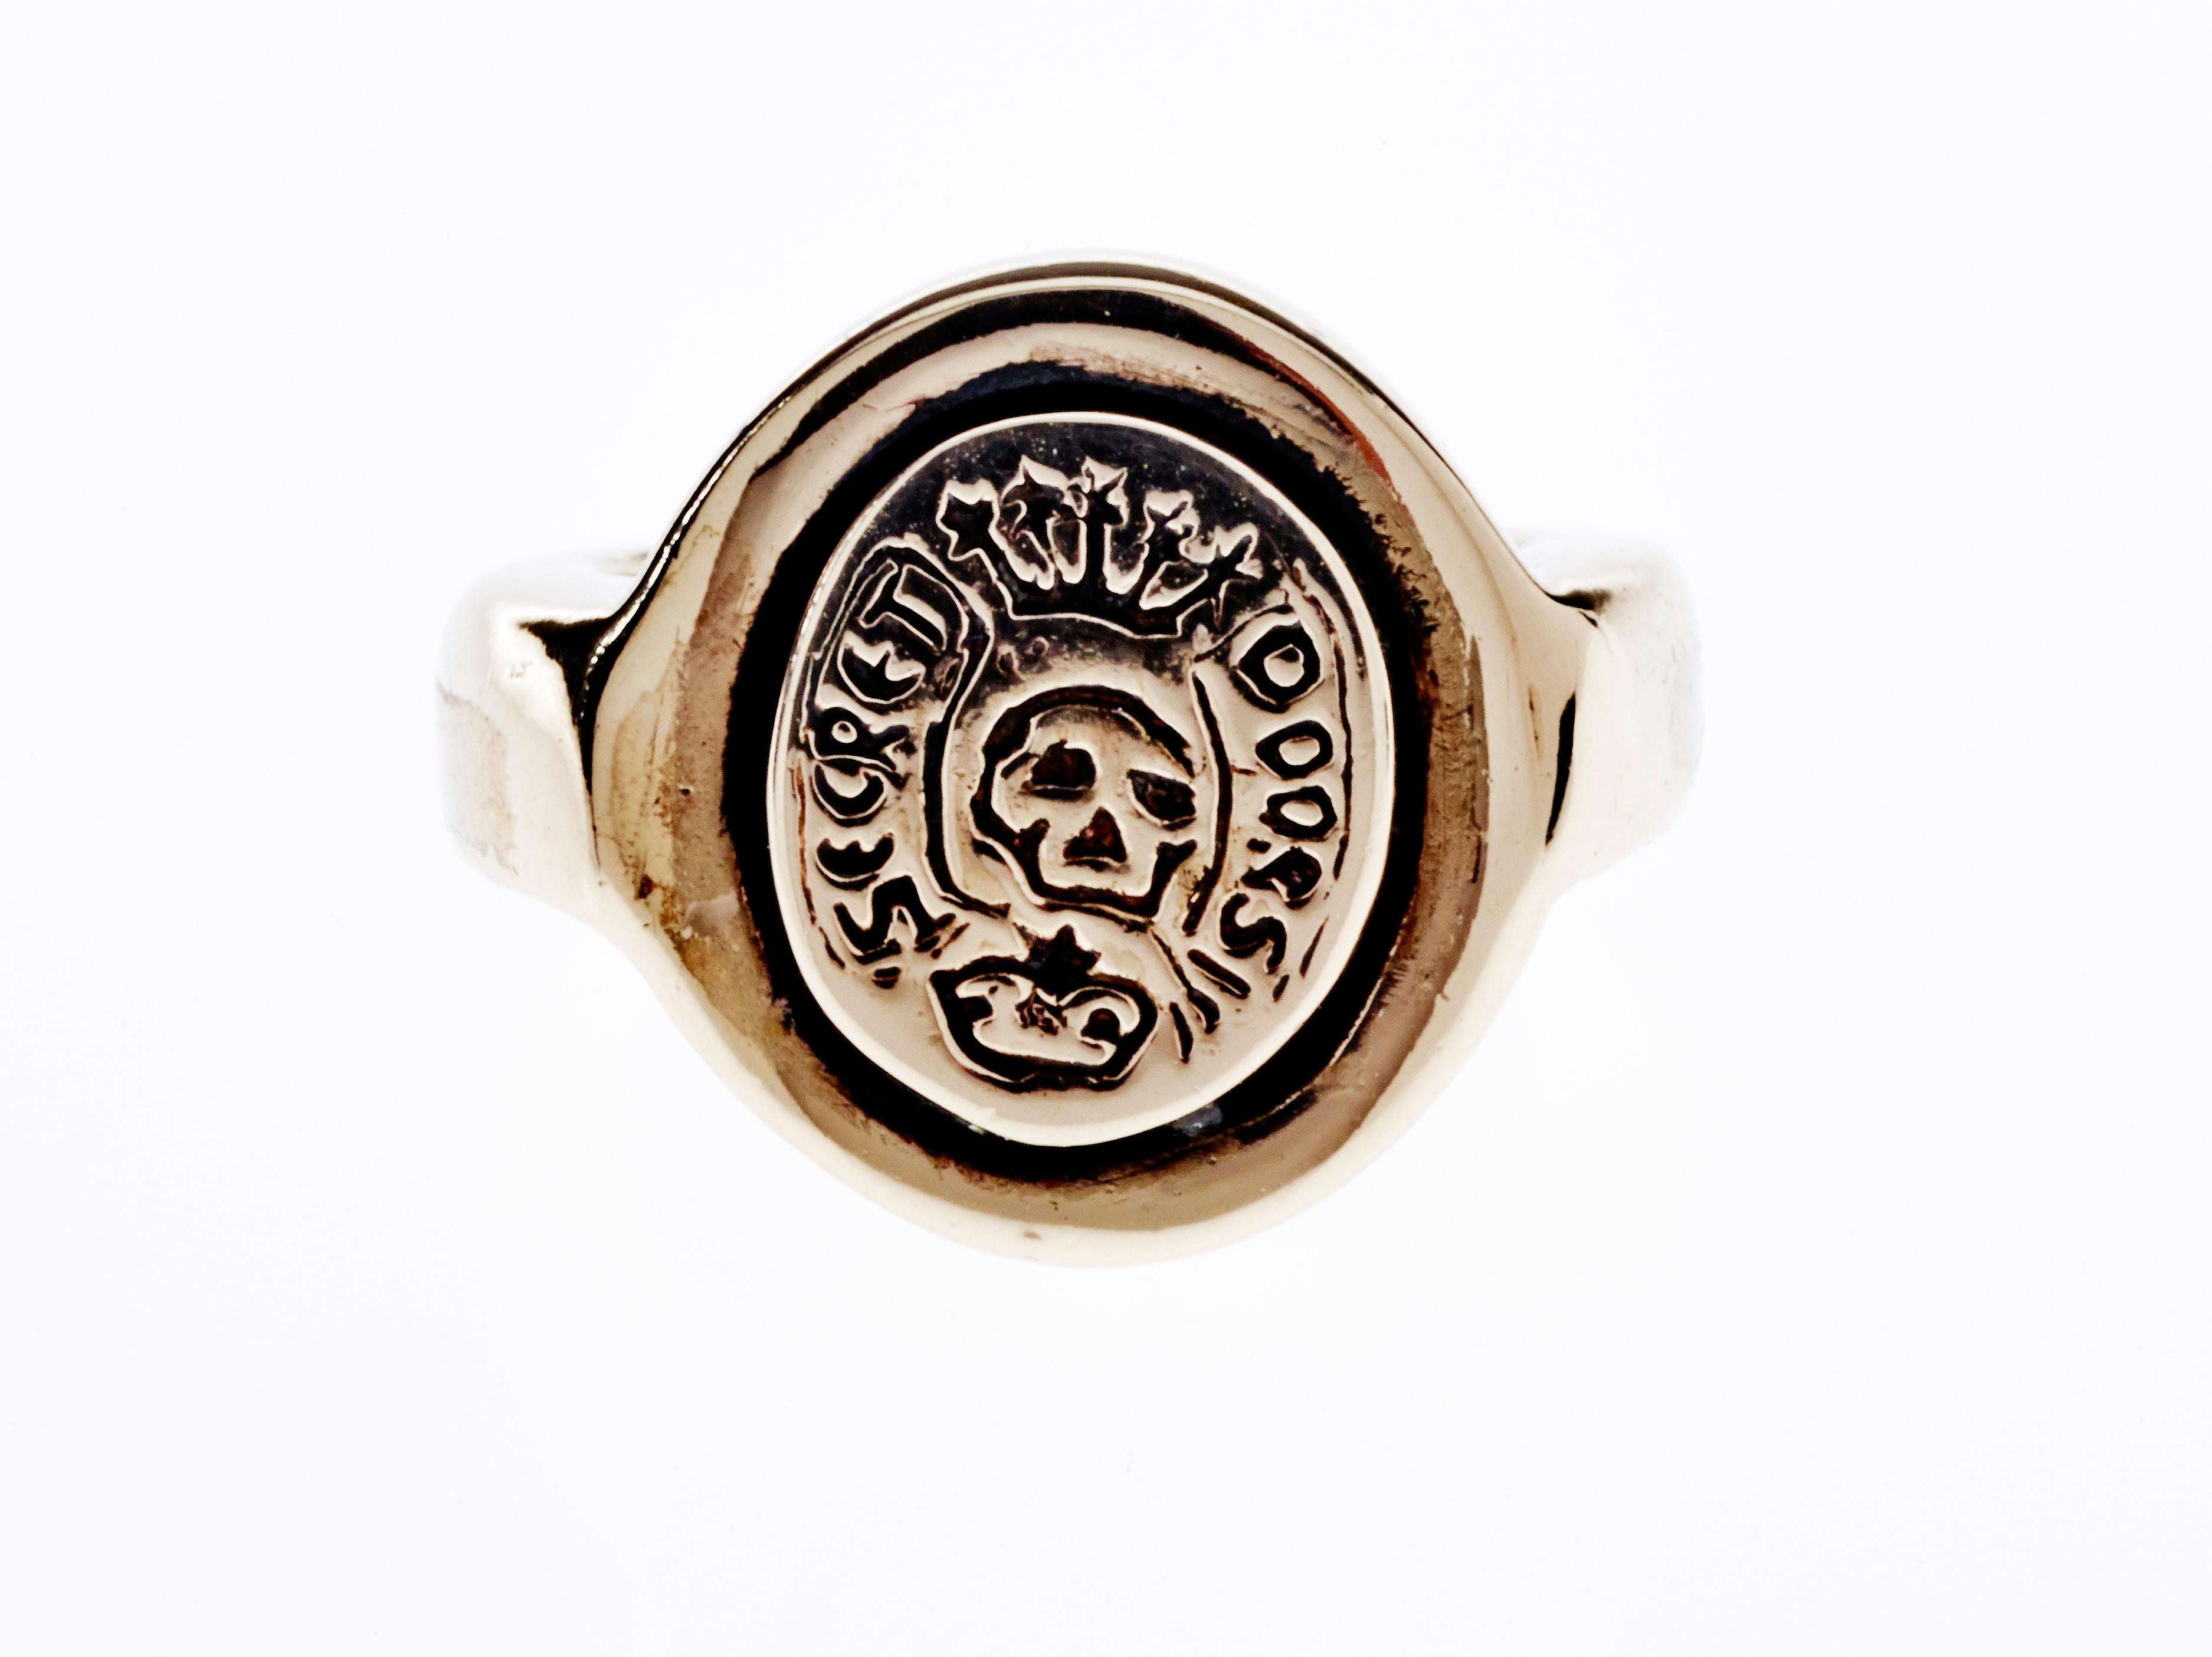 Gold Crest Signet Ring Skull Victorian Memento Mori Style J Dauphin
J DAUPHIN signature piece 